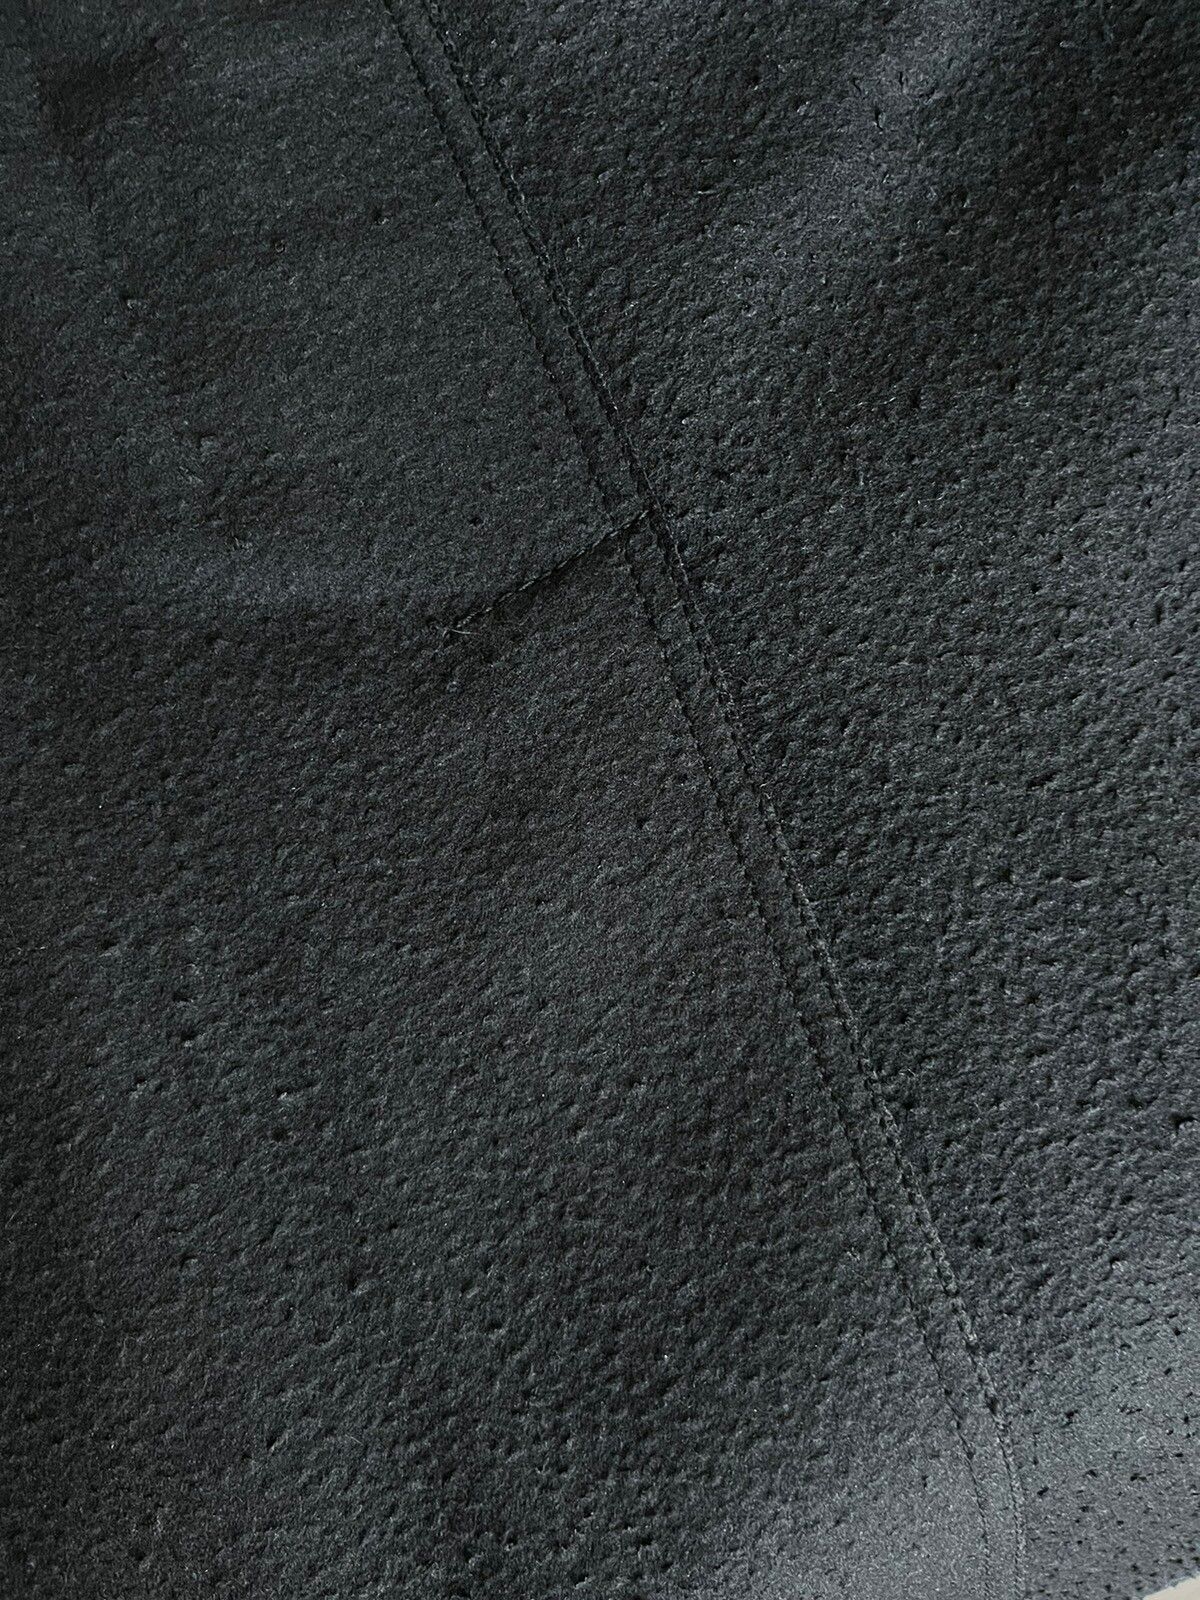 Dior ⚡️QUICK SALE⚡️Dior Dark Grey Black Duffle Coat Hedi Slimane Size US M / EU 48-50 / 2 - 7 Thumbnail